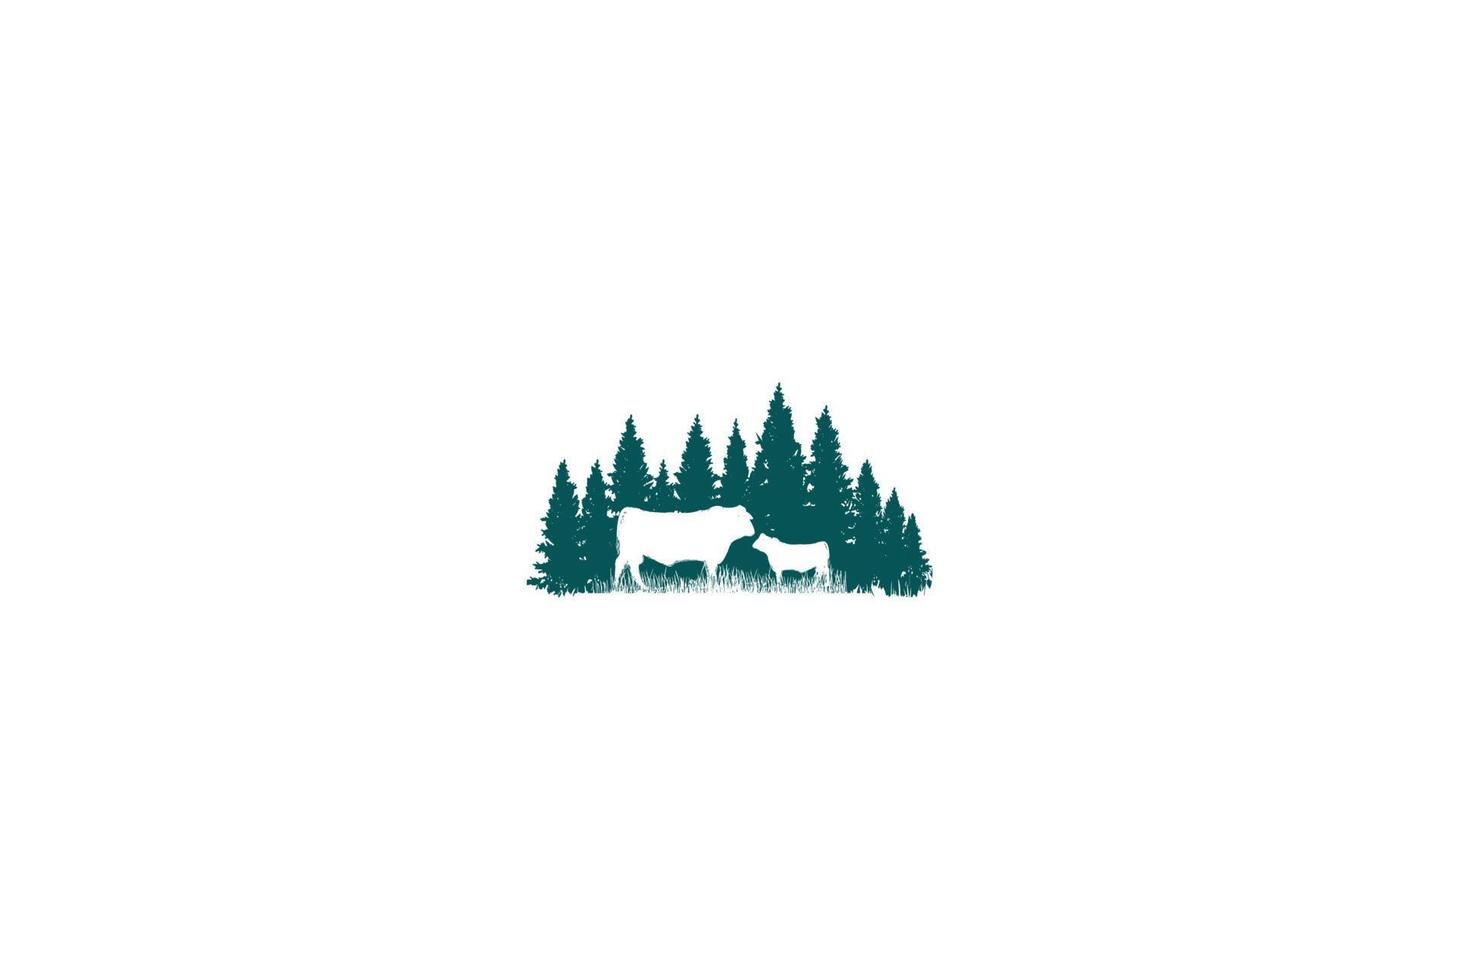 Pine Cedar Spruce Evergreen Cypress Larch Hemlock Fir Trees Forest with Angus Cow Bull for Cattle Livestock Farm Logo Design Vector